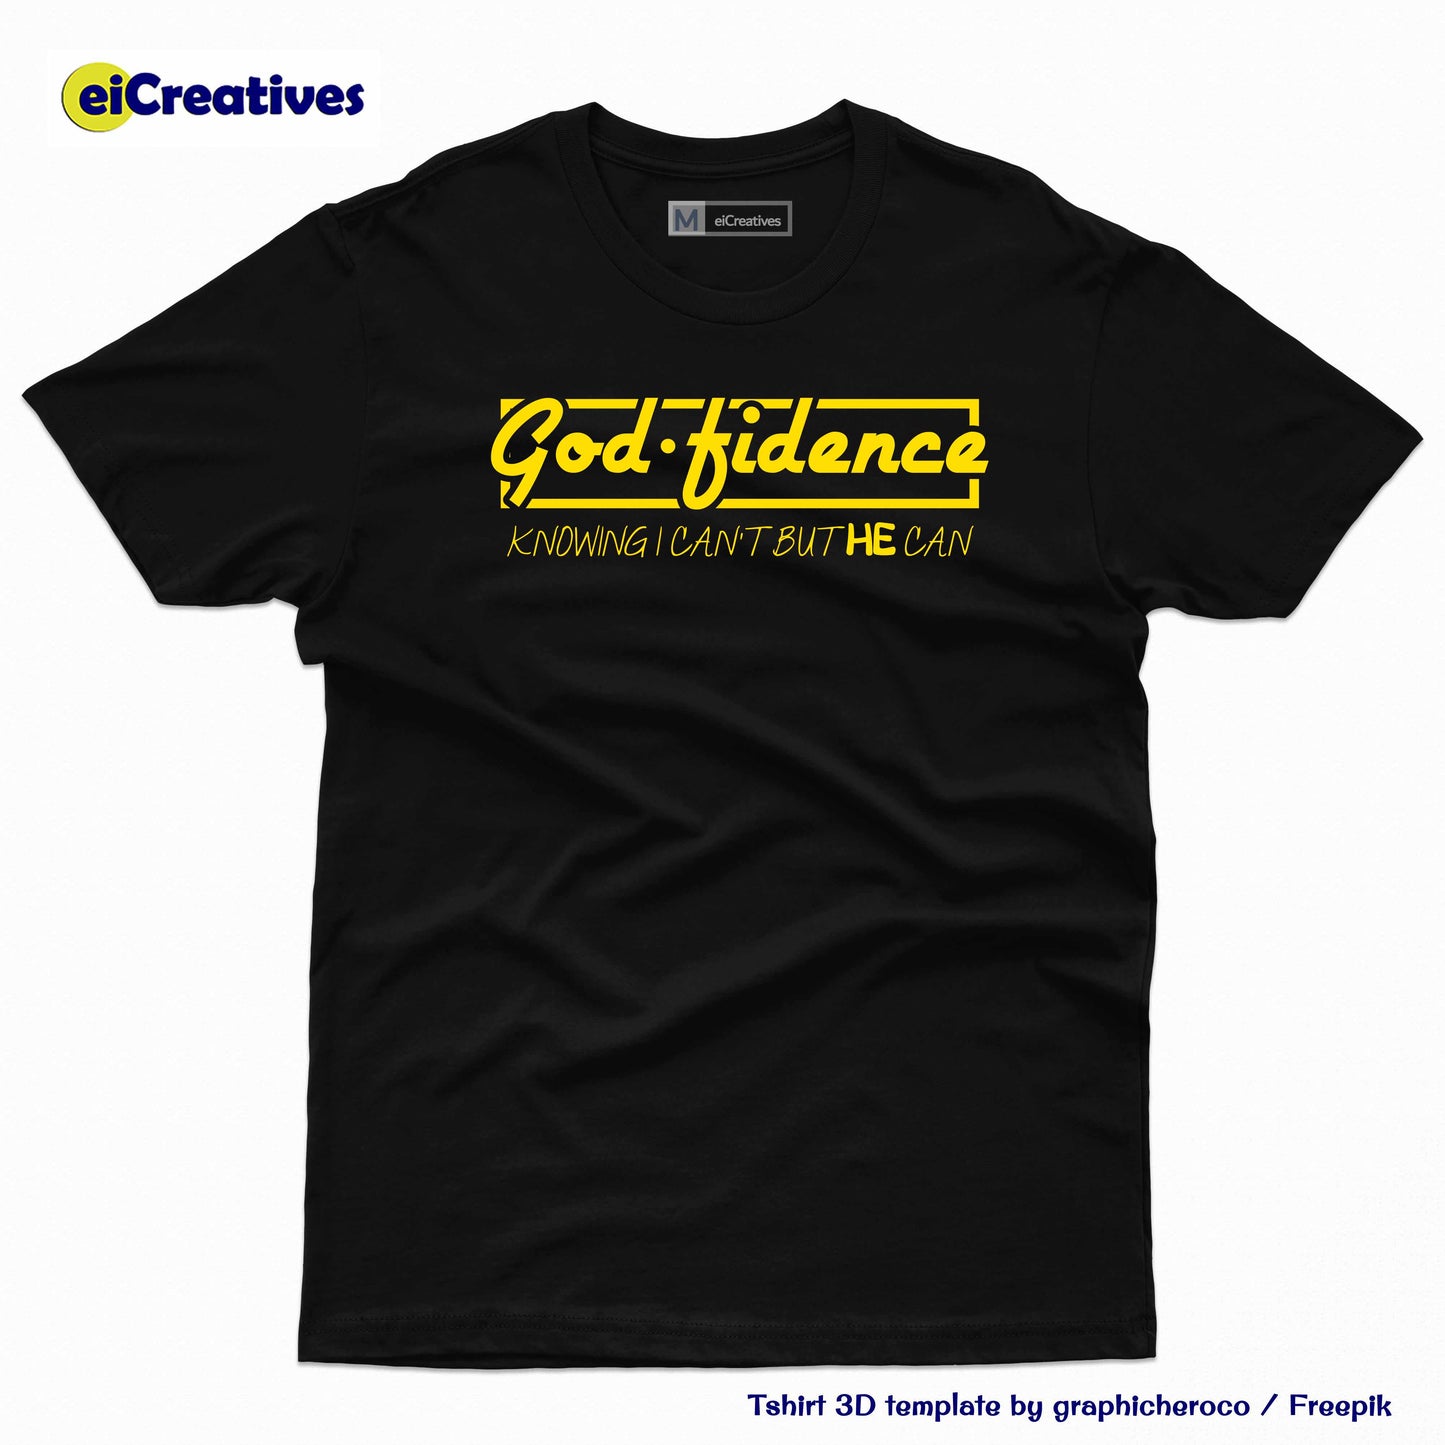 God-fidence Tshirt